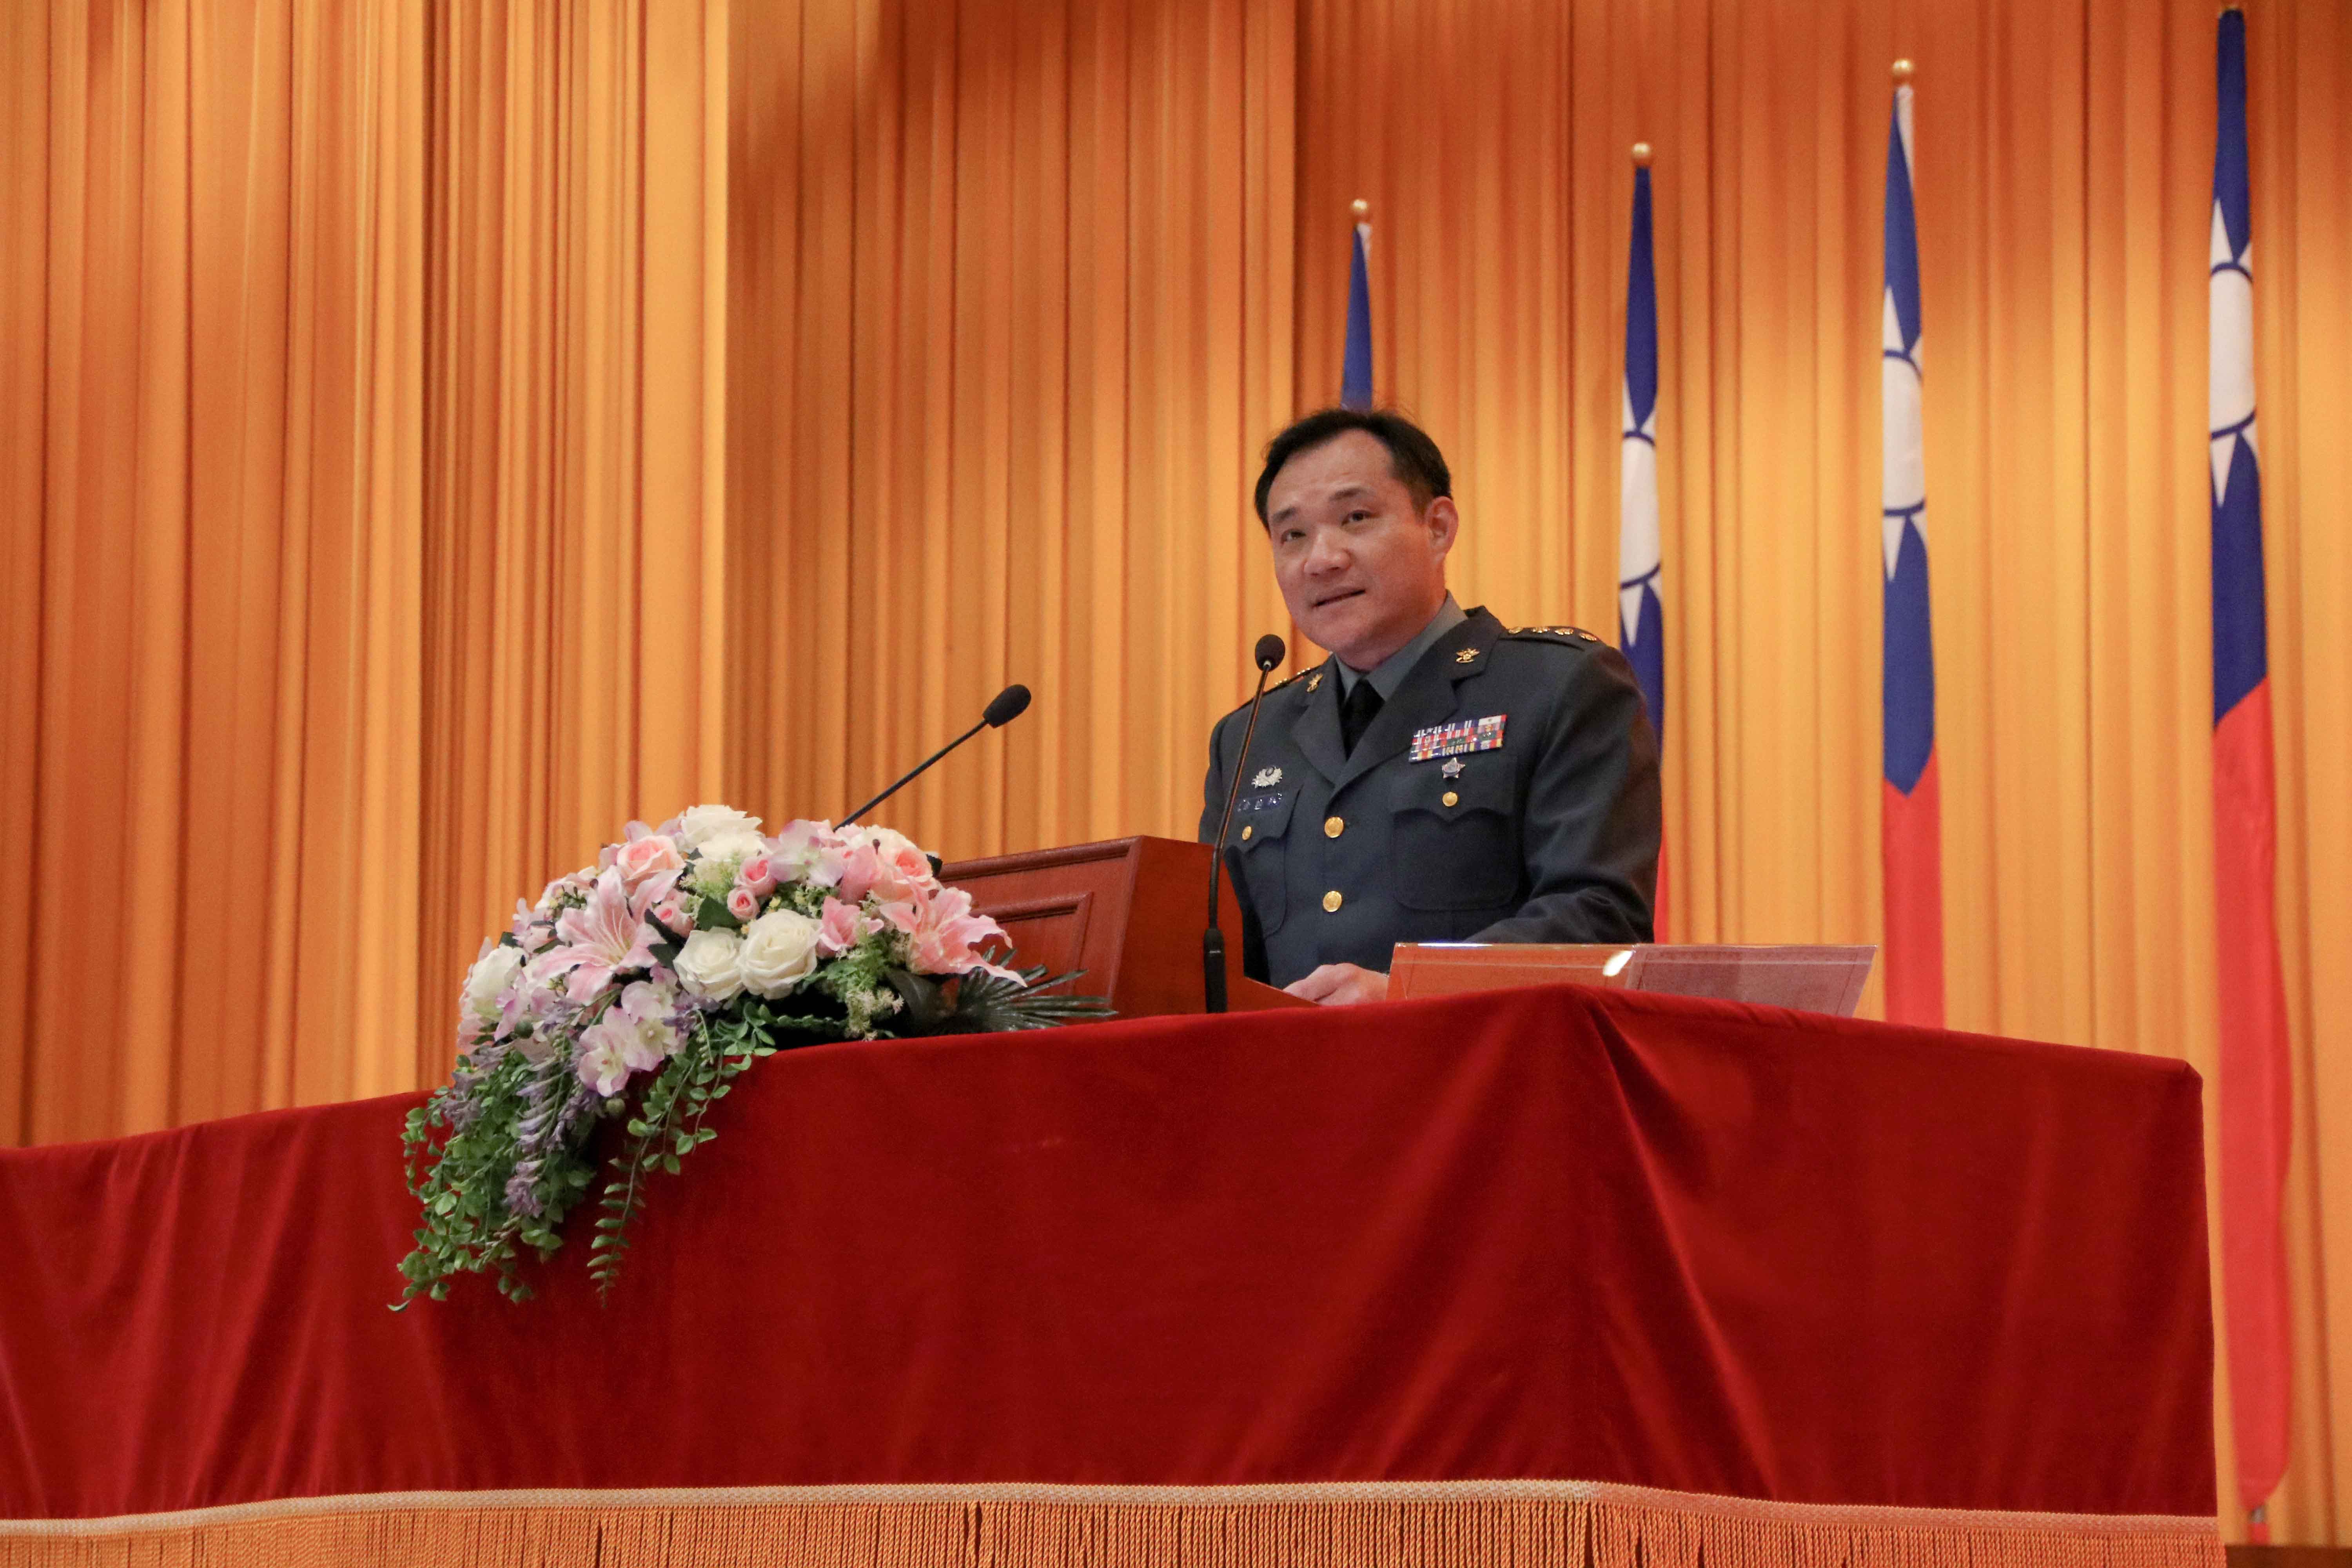 Colonel Yu gave a speech.